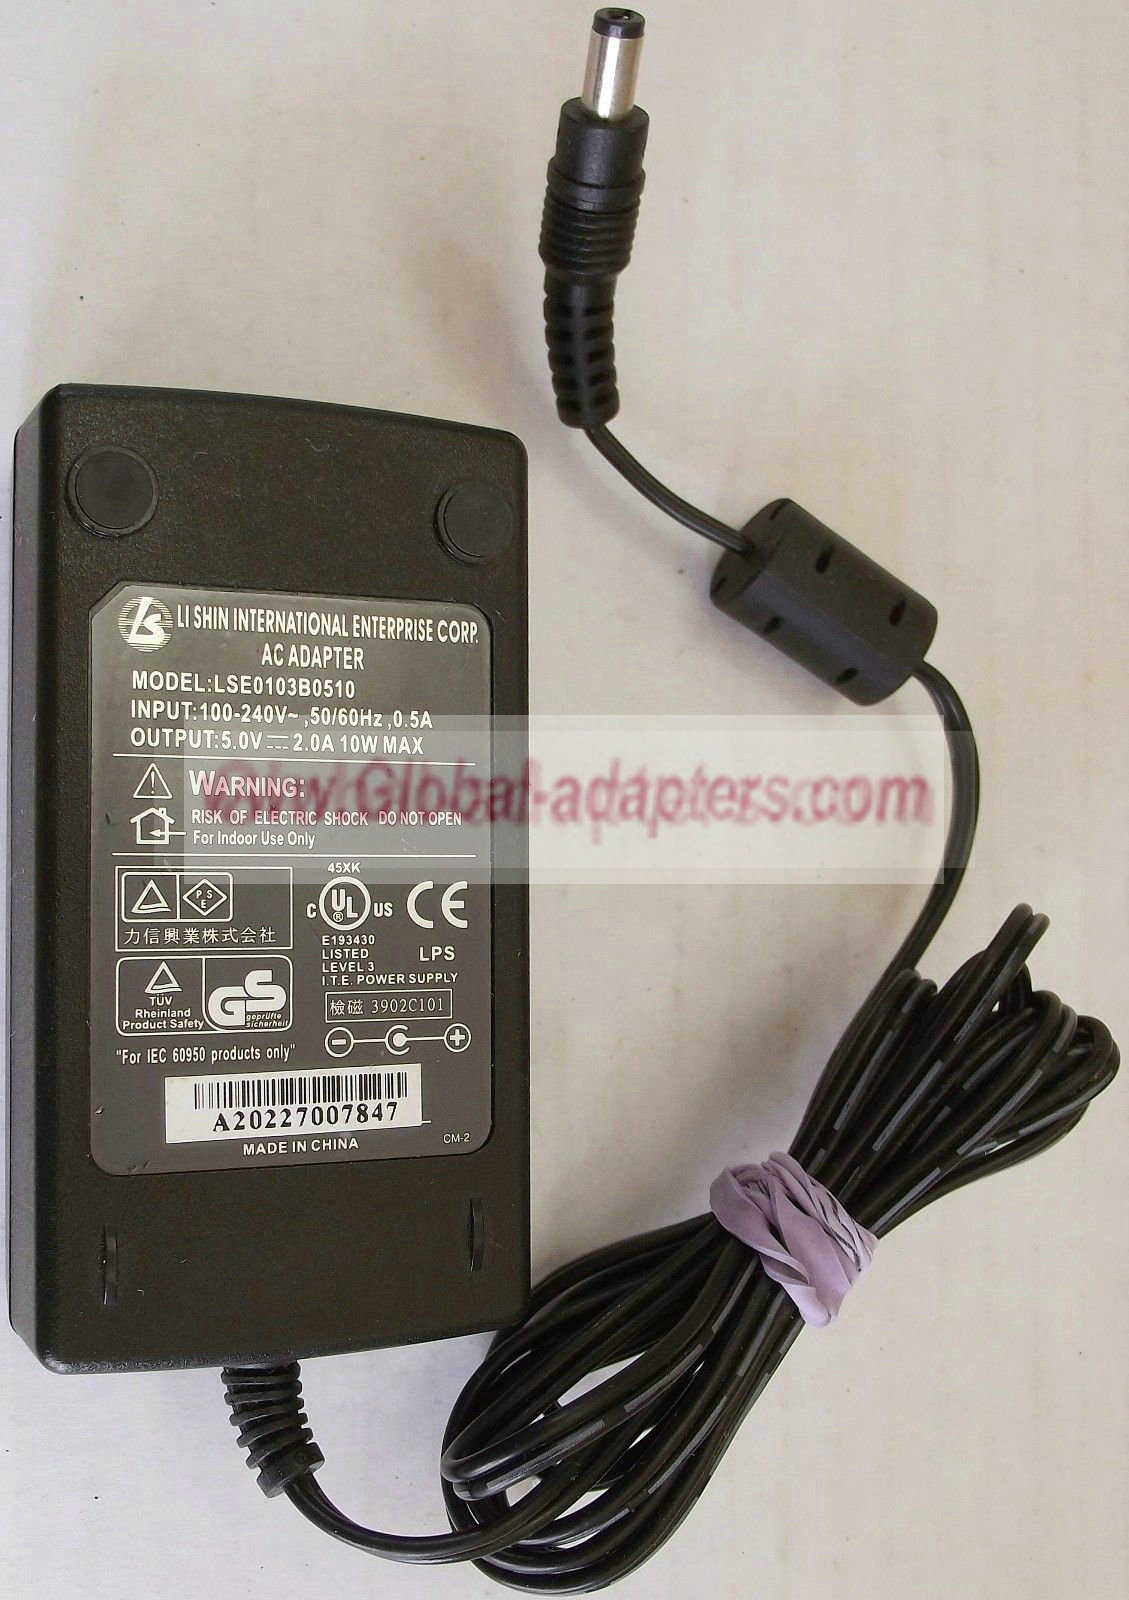 NEW 5V 2A Li Shin International Enterprise LSE0103B0510 AC Adapter - Click Image to Close